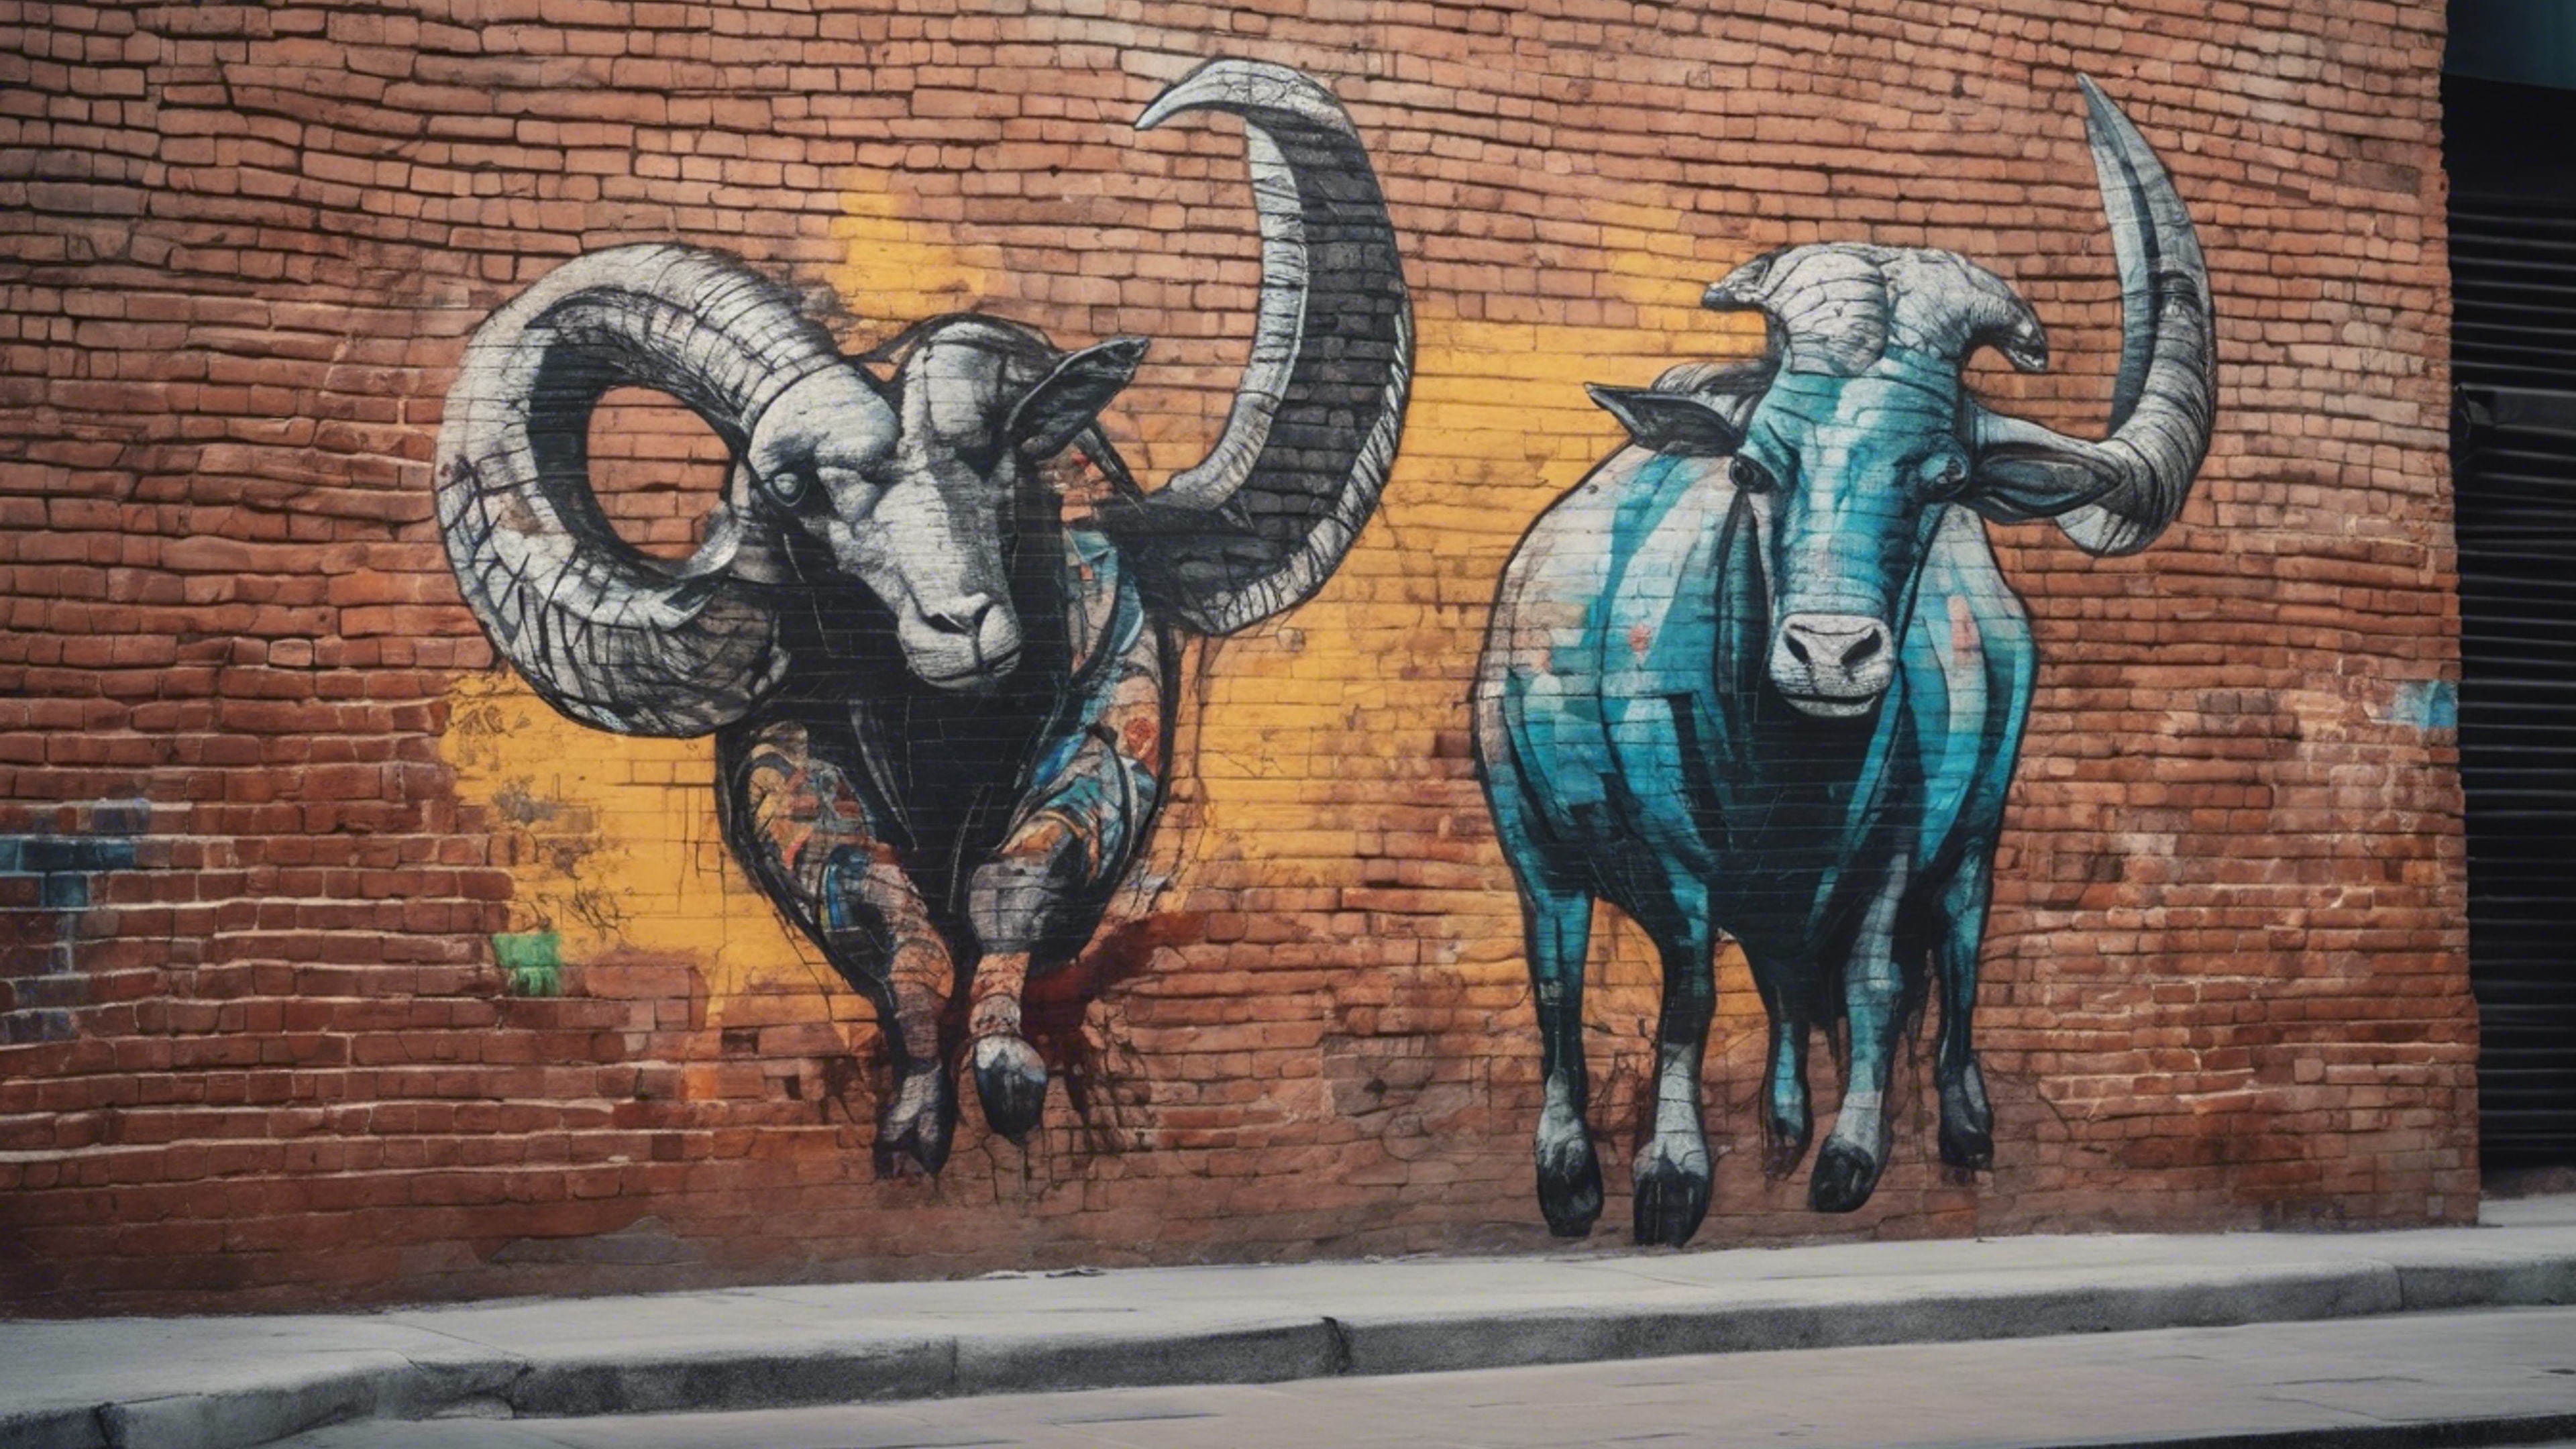 A Capricorn painted as street art on a brick wall in a busy city street. Fondo de pantalla[8124c45194ee4830b5c7]